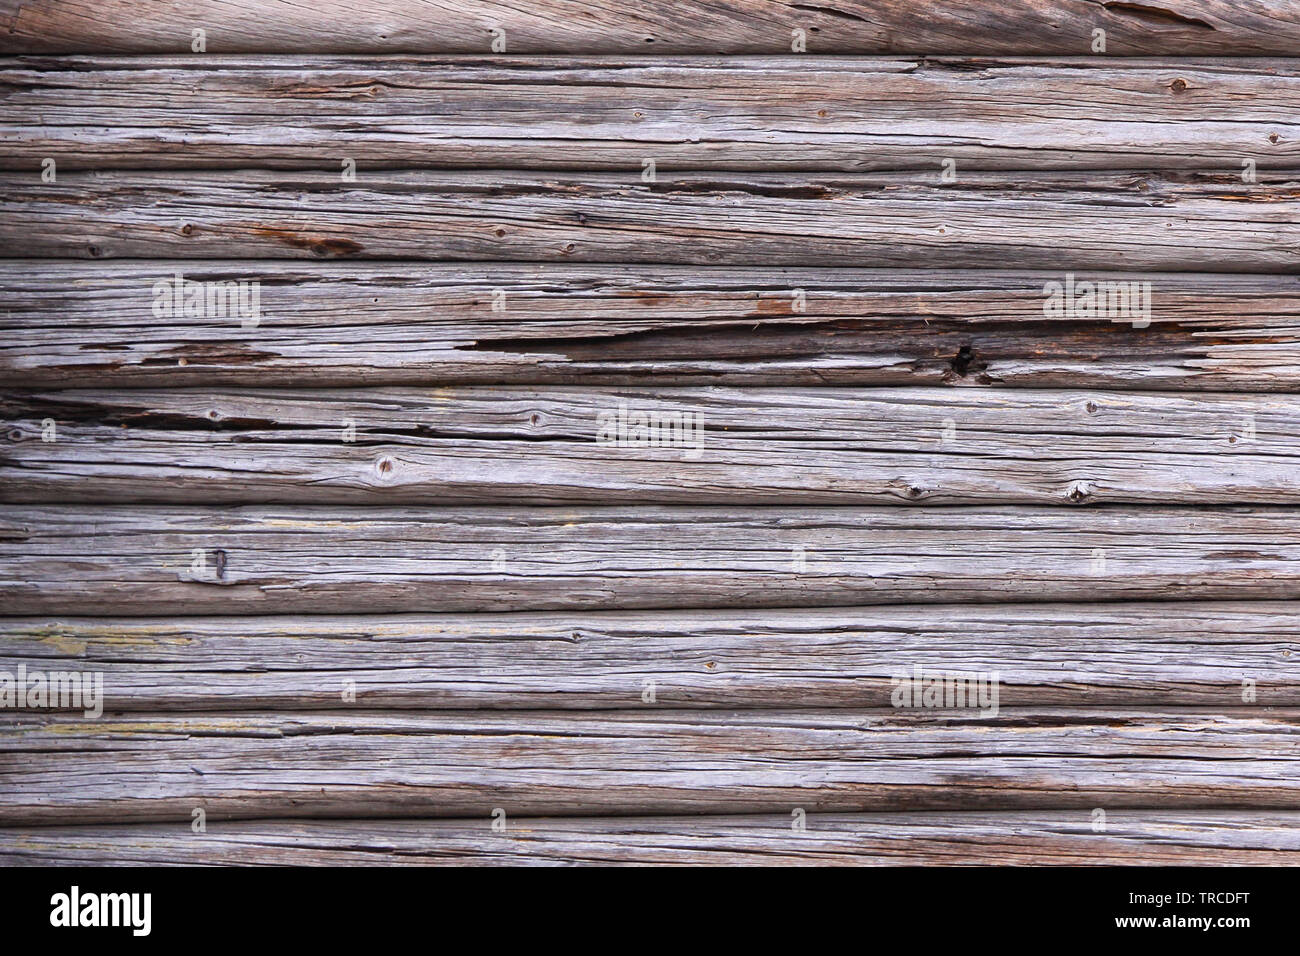 horizontal wooden planks Stock Photo